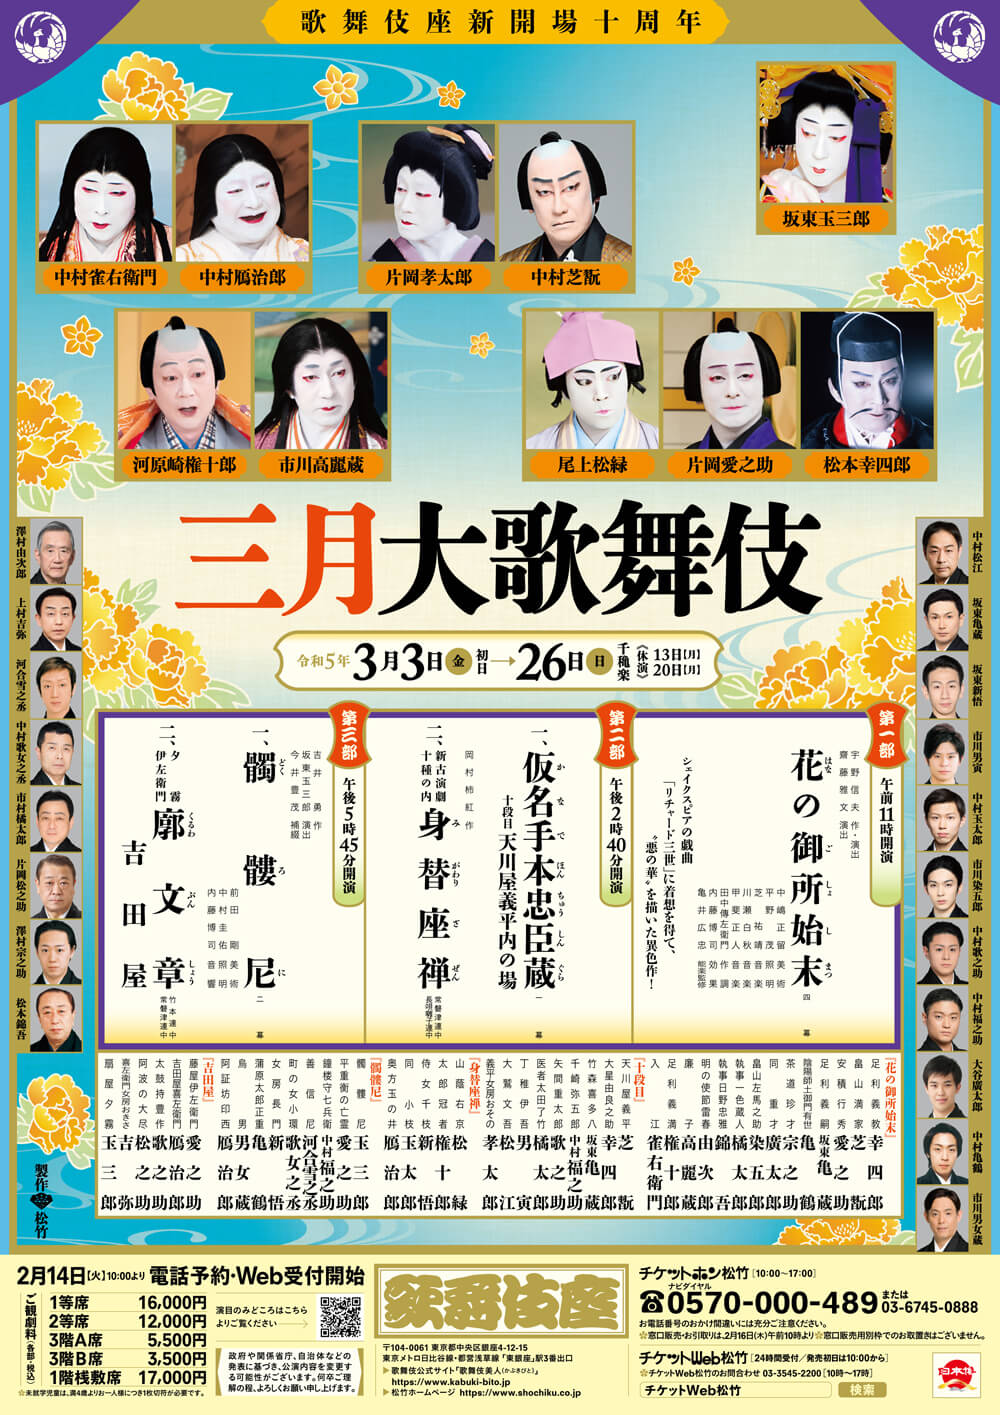 March Program at the Kabukiza Theatre